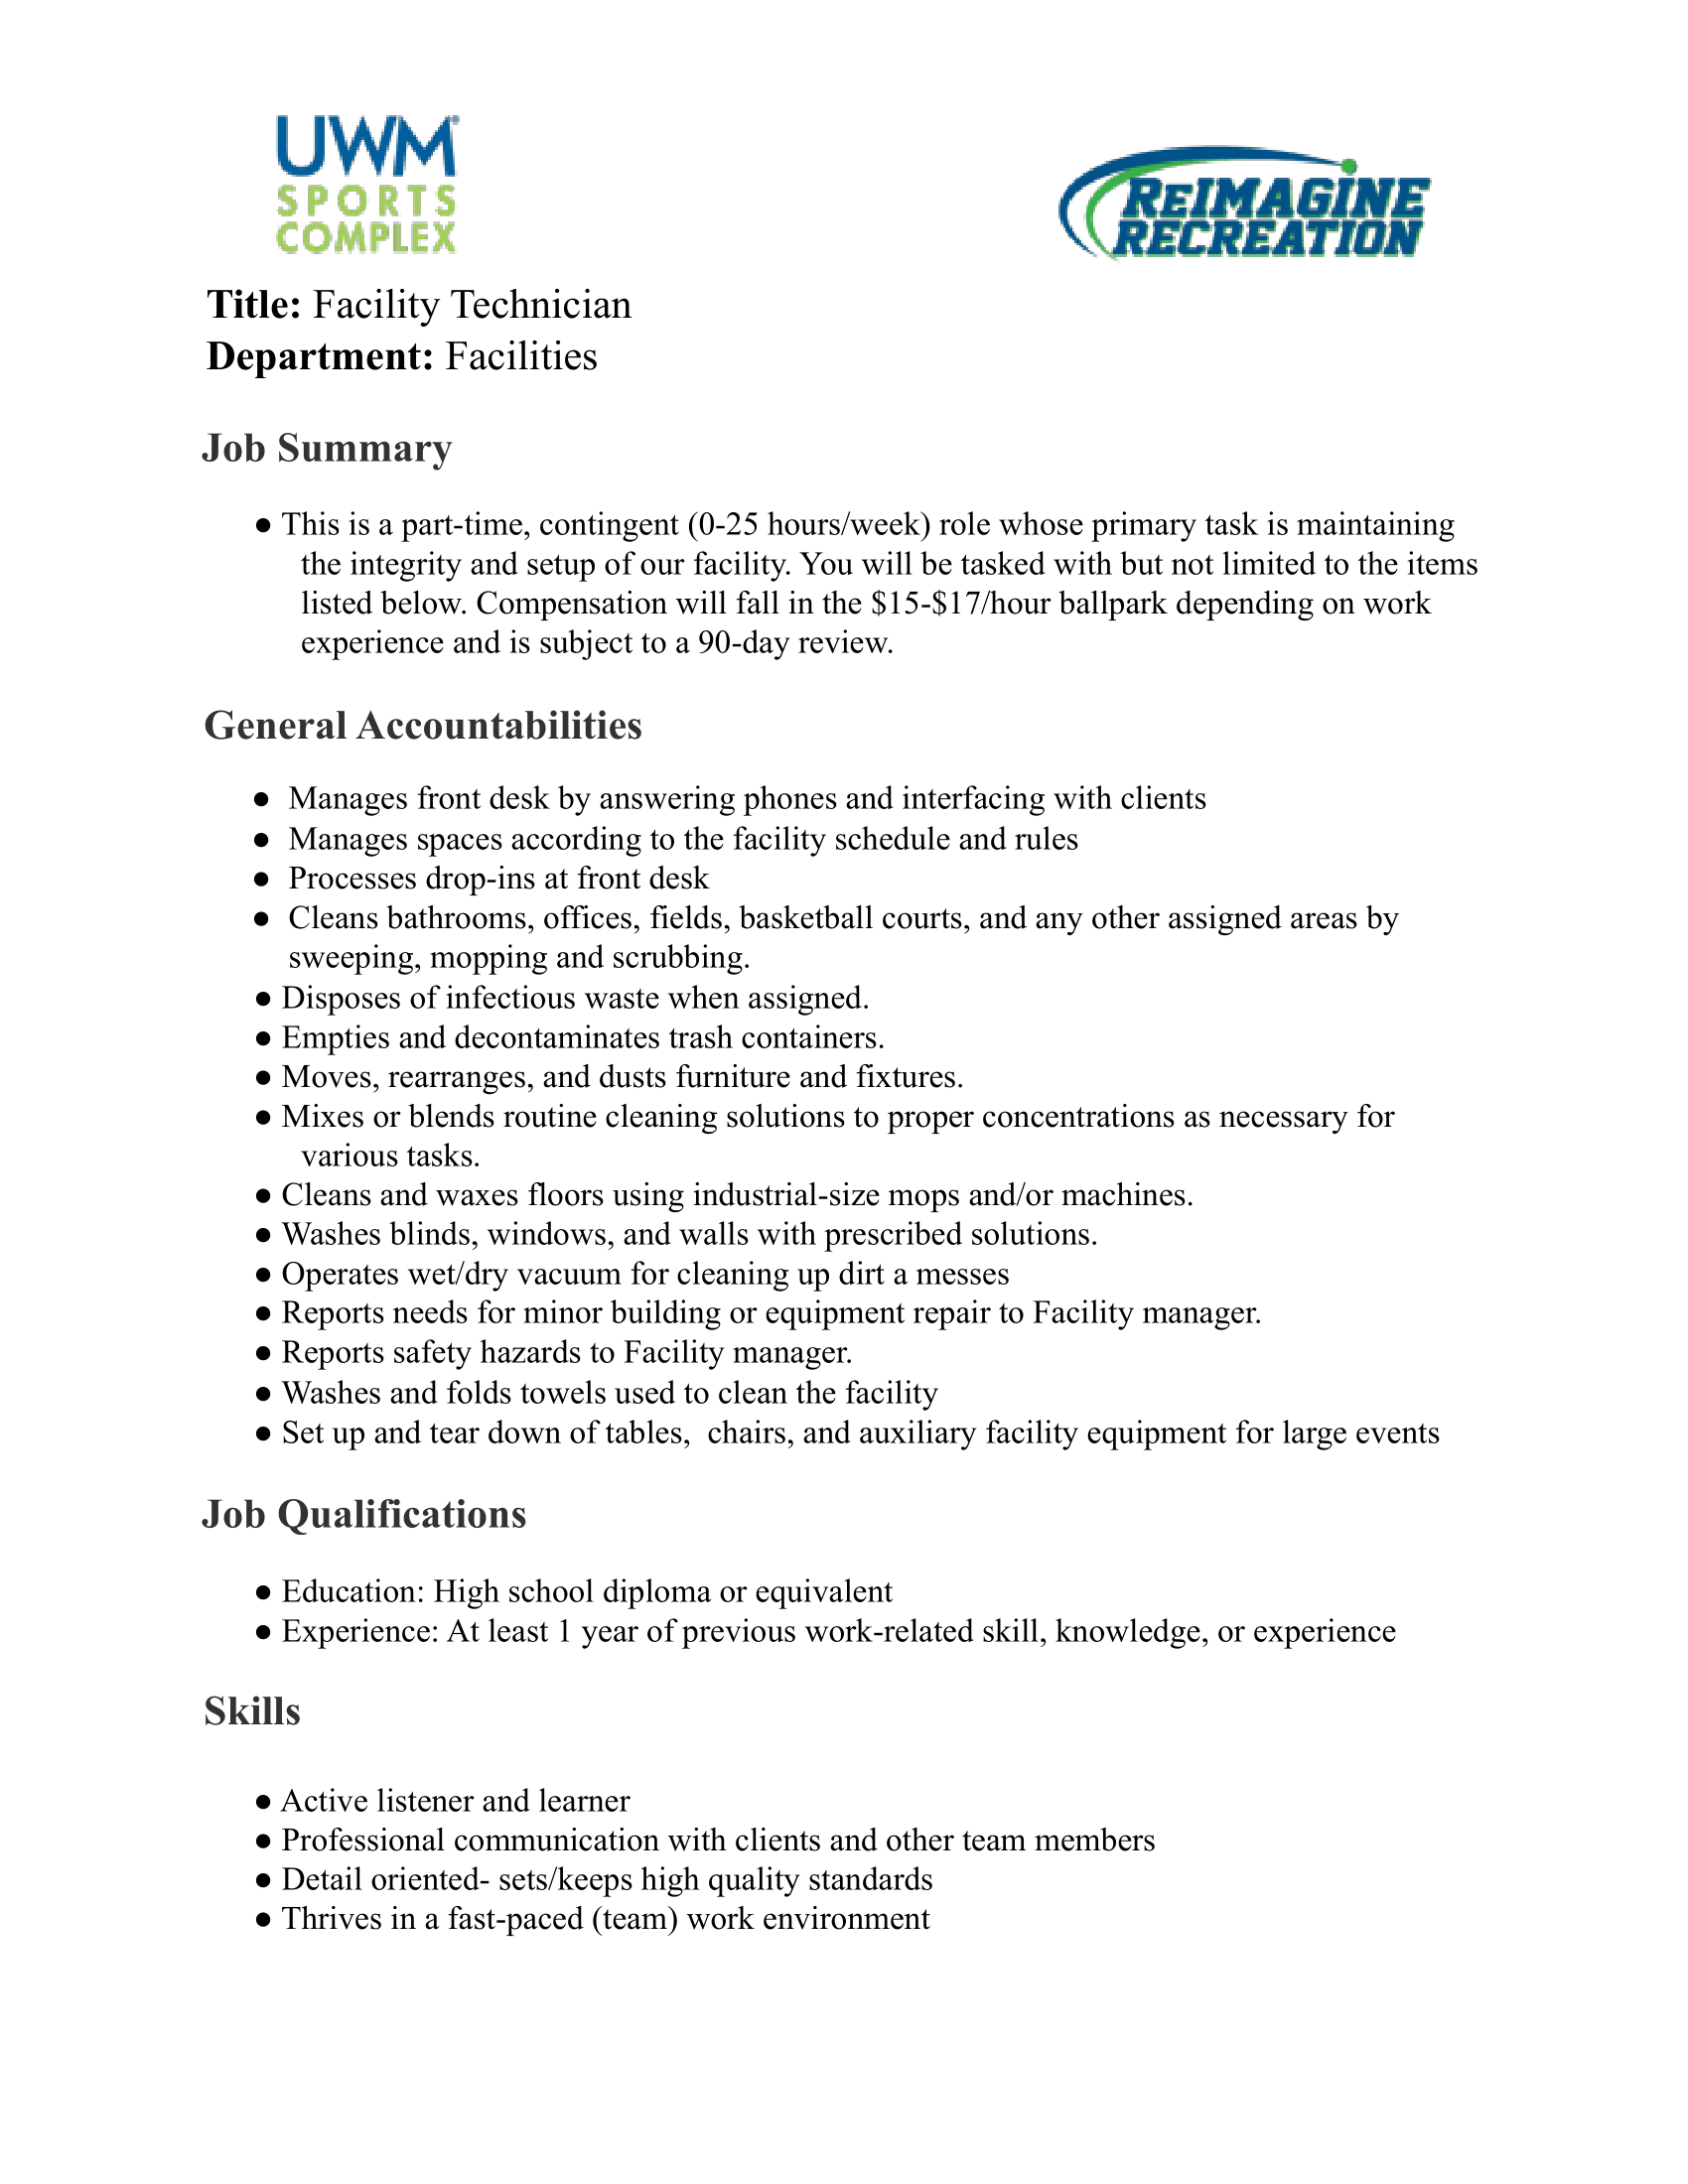 Facility Technician Job Description-1